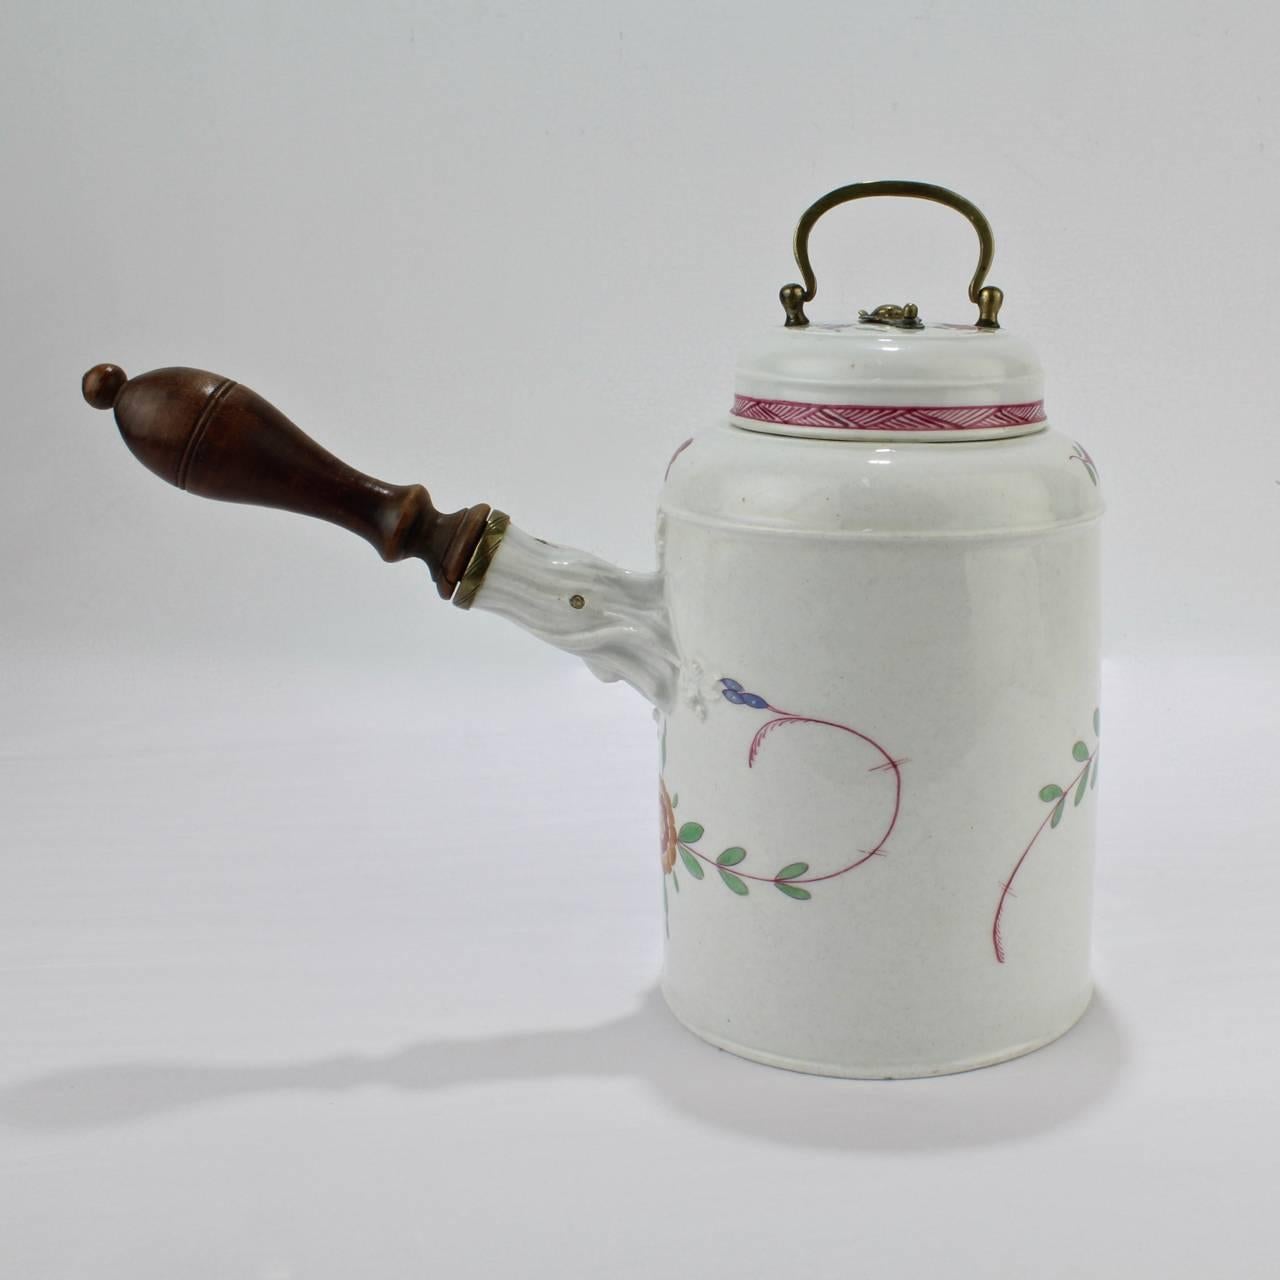 18th century chocolate pot